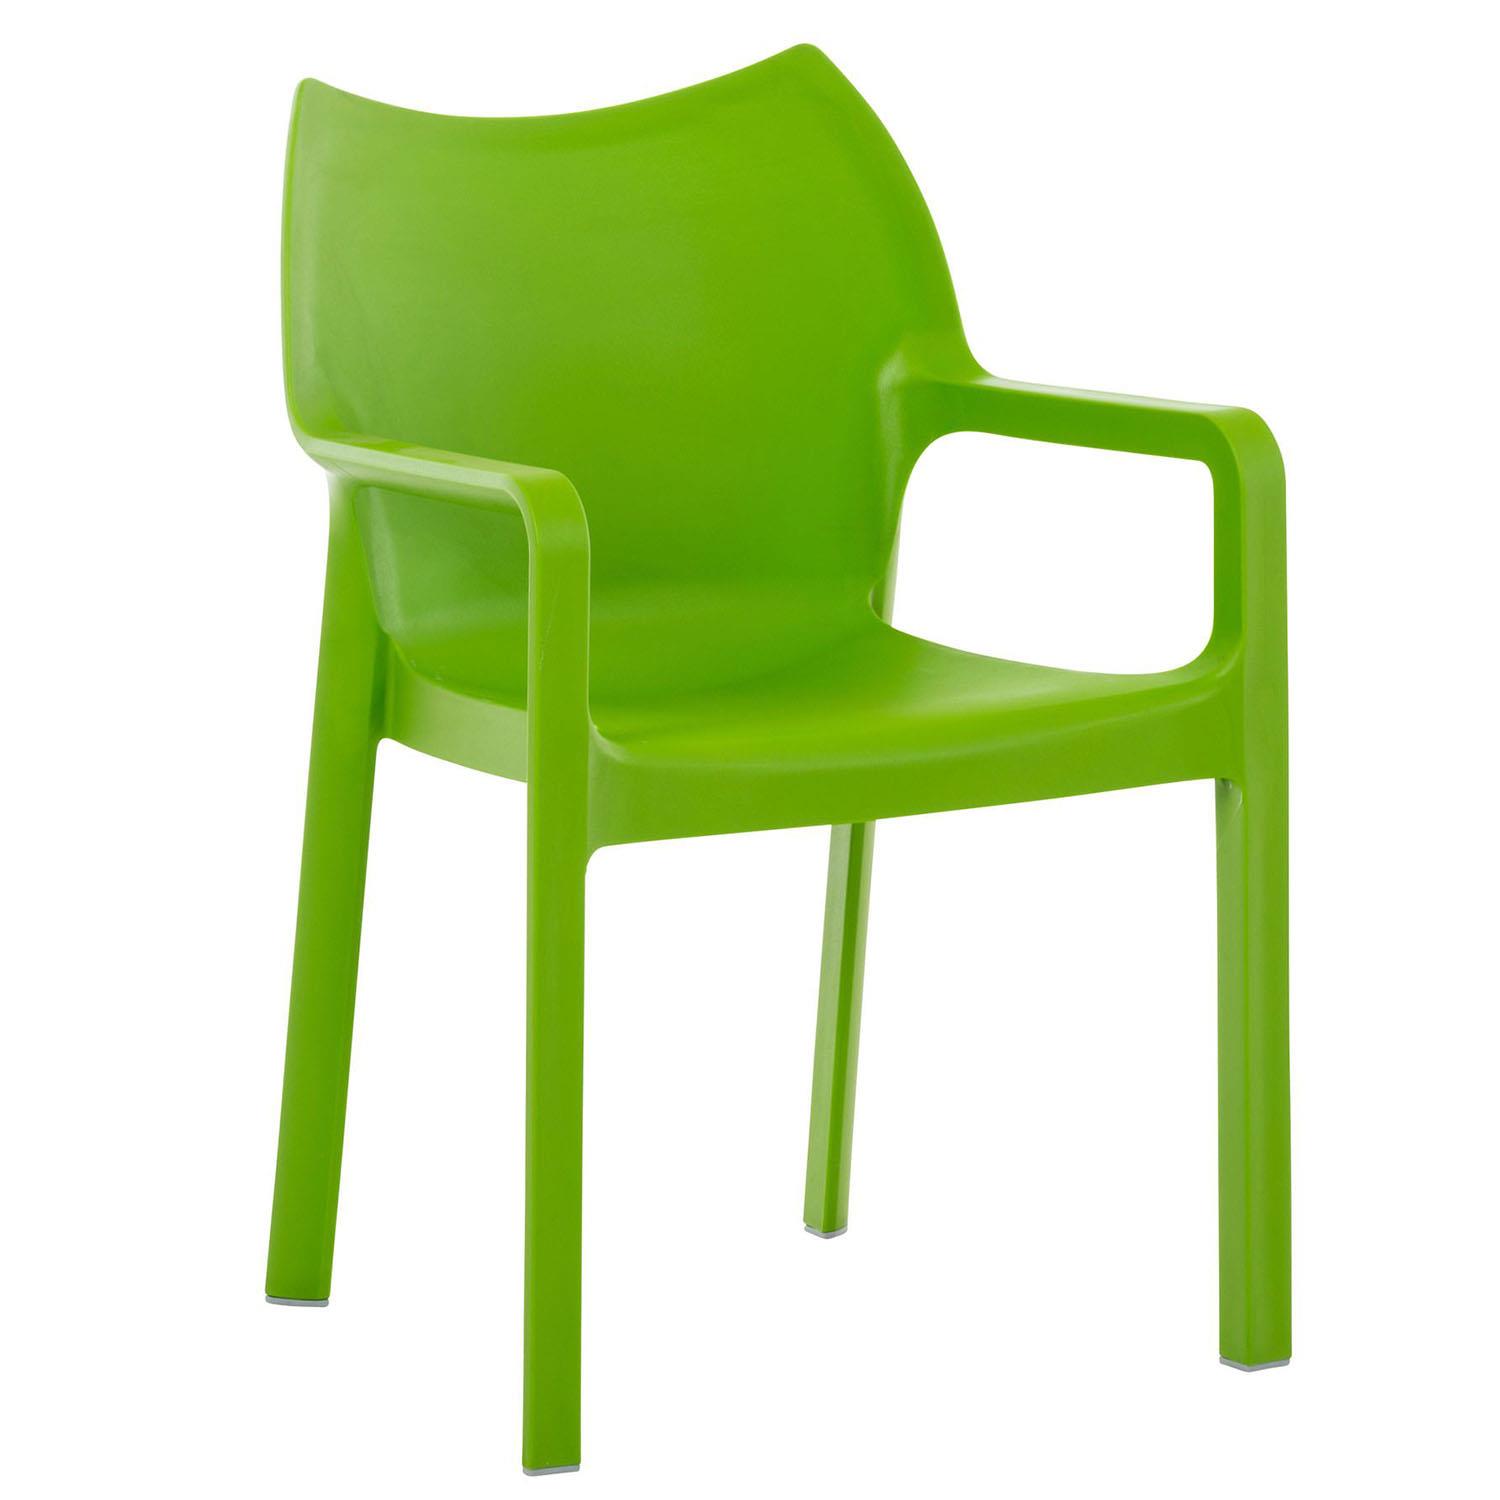 Cadeira de Visita RAMOS, Apoia Braços Integrados, Moderno e Resistente, Cor Verde